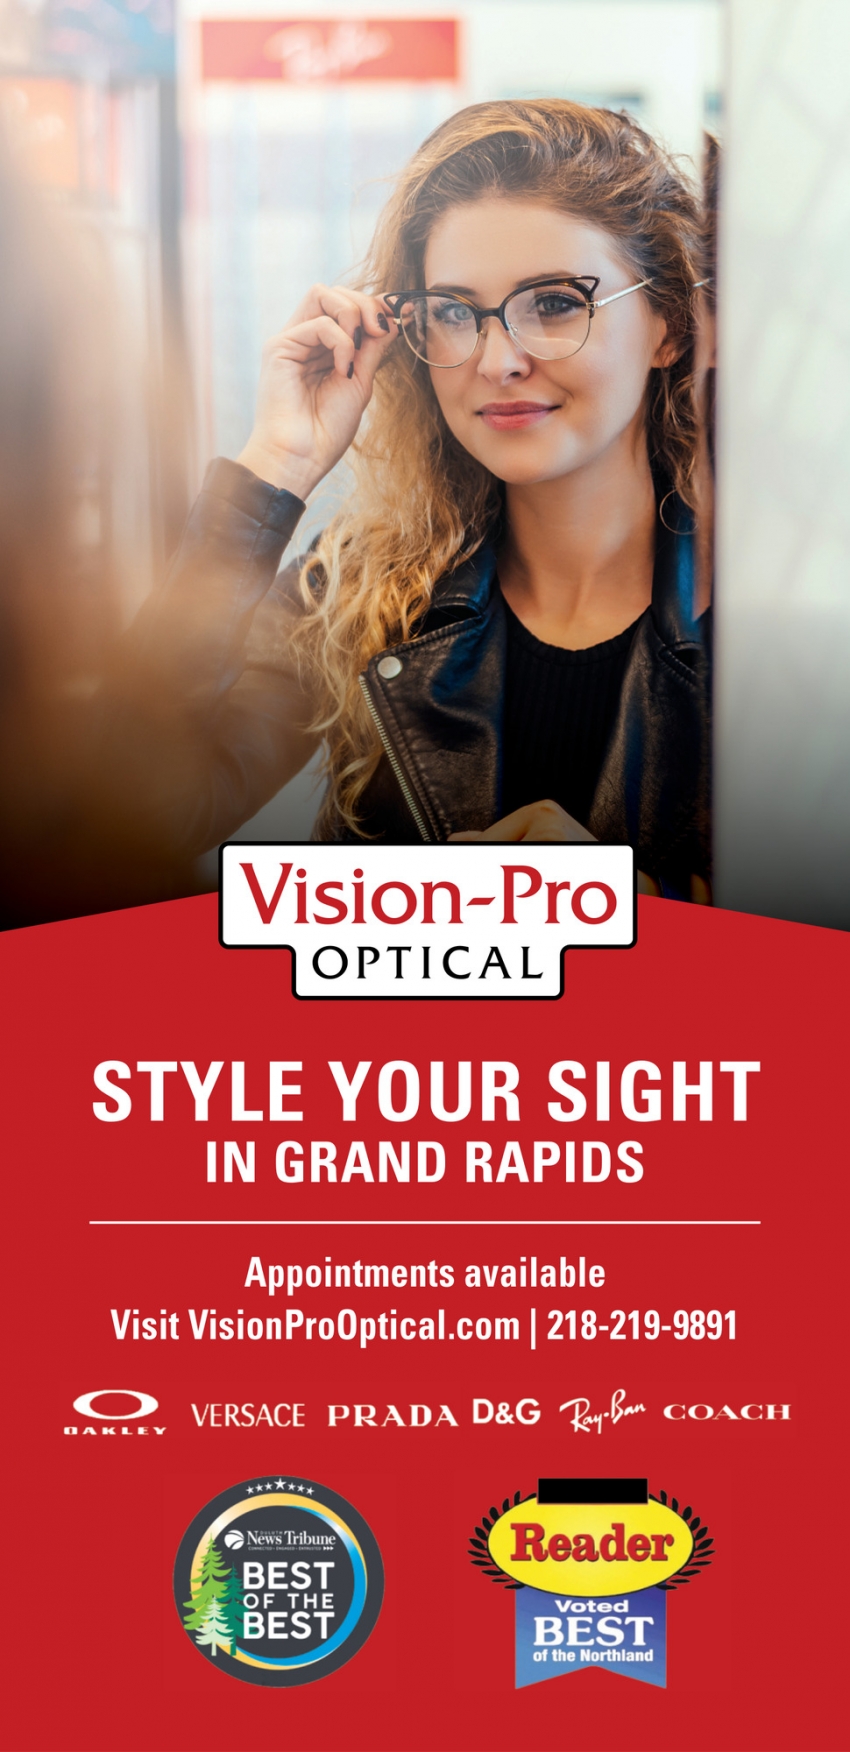 Vision-Pro Optical